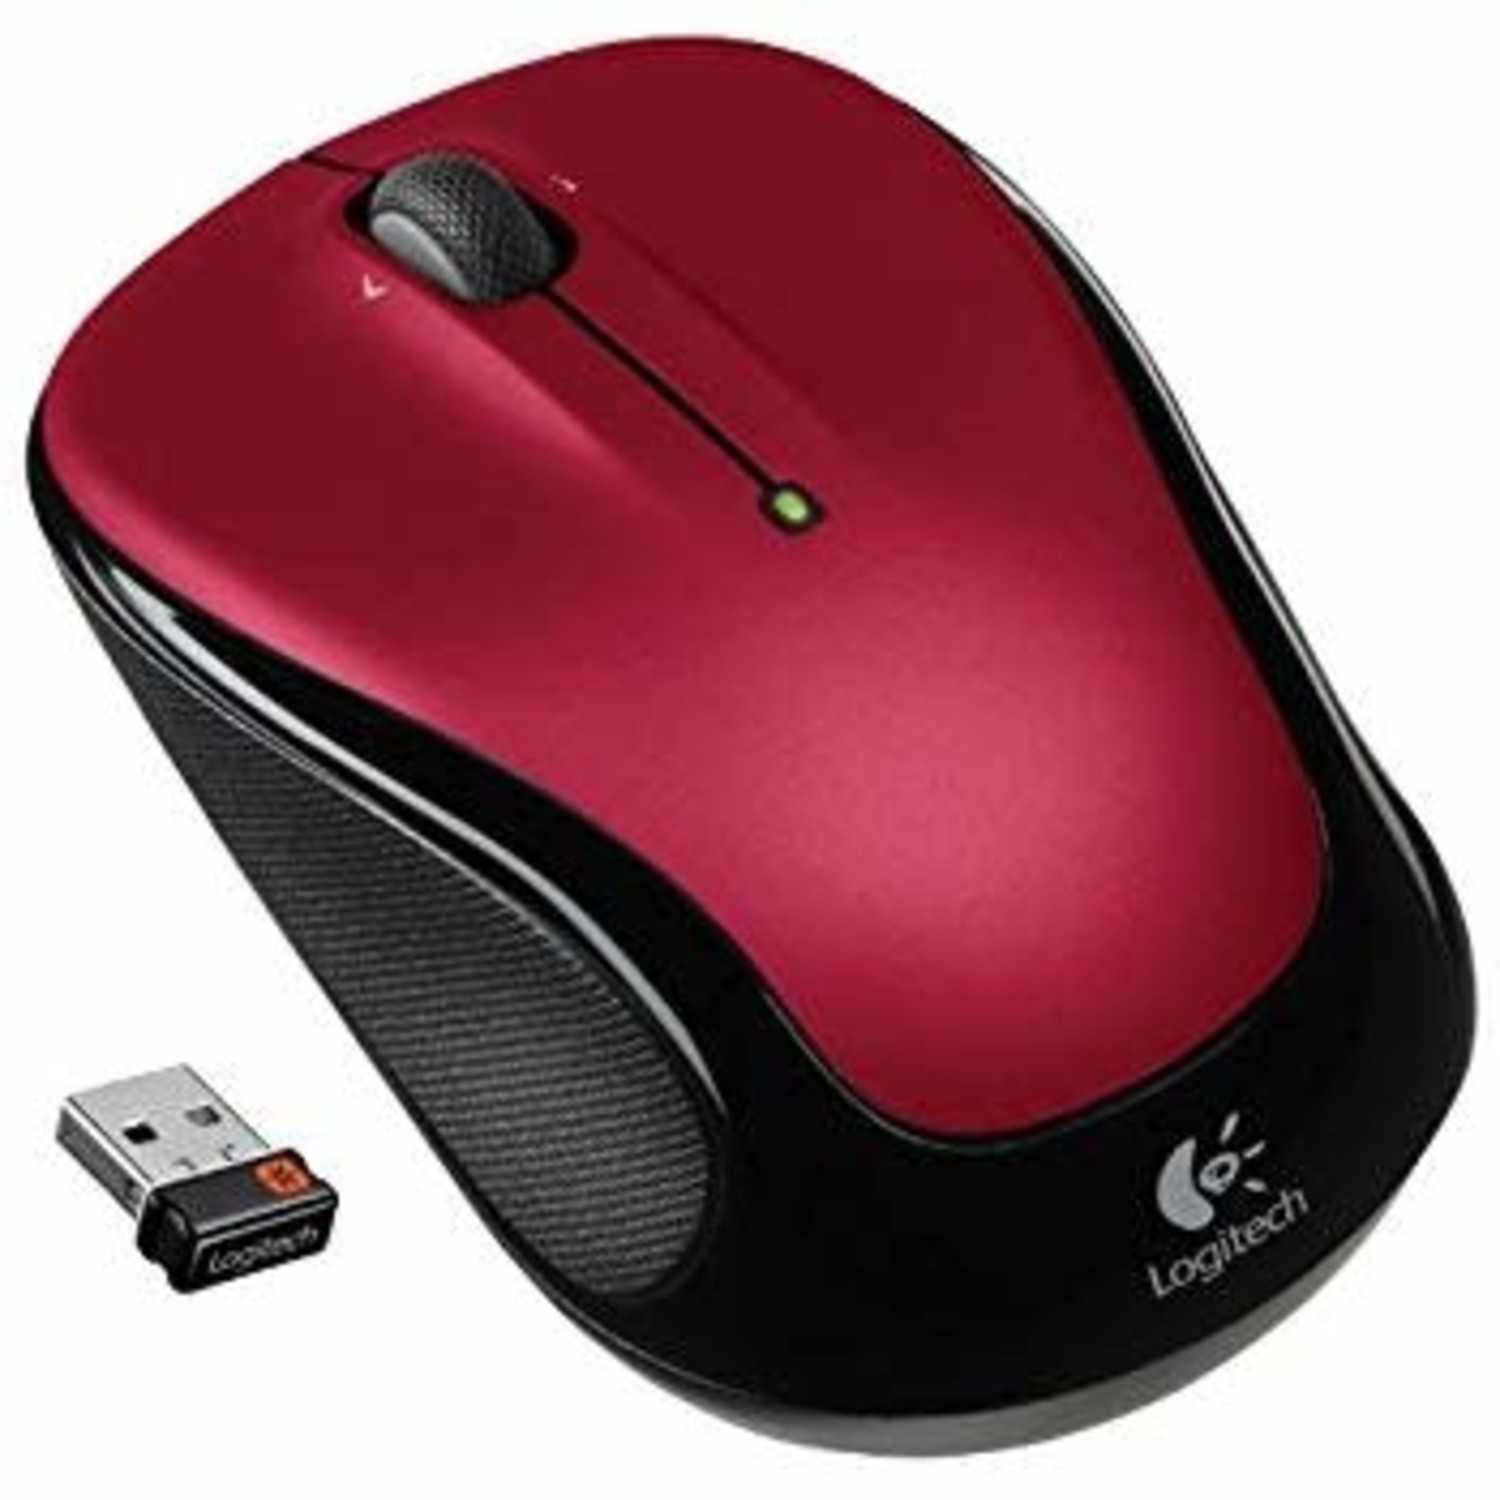 enkelt Jurassic Park Reparation mulig Logitech M325 Wireless Mouse Red - Campus Computer Store